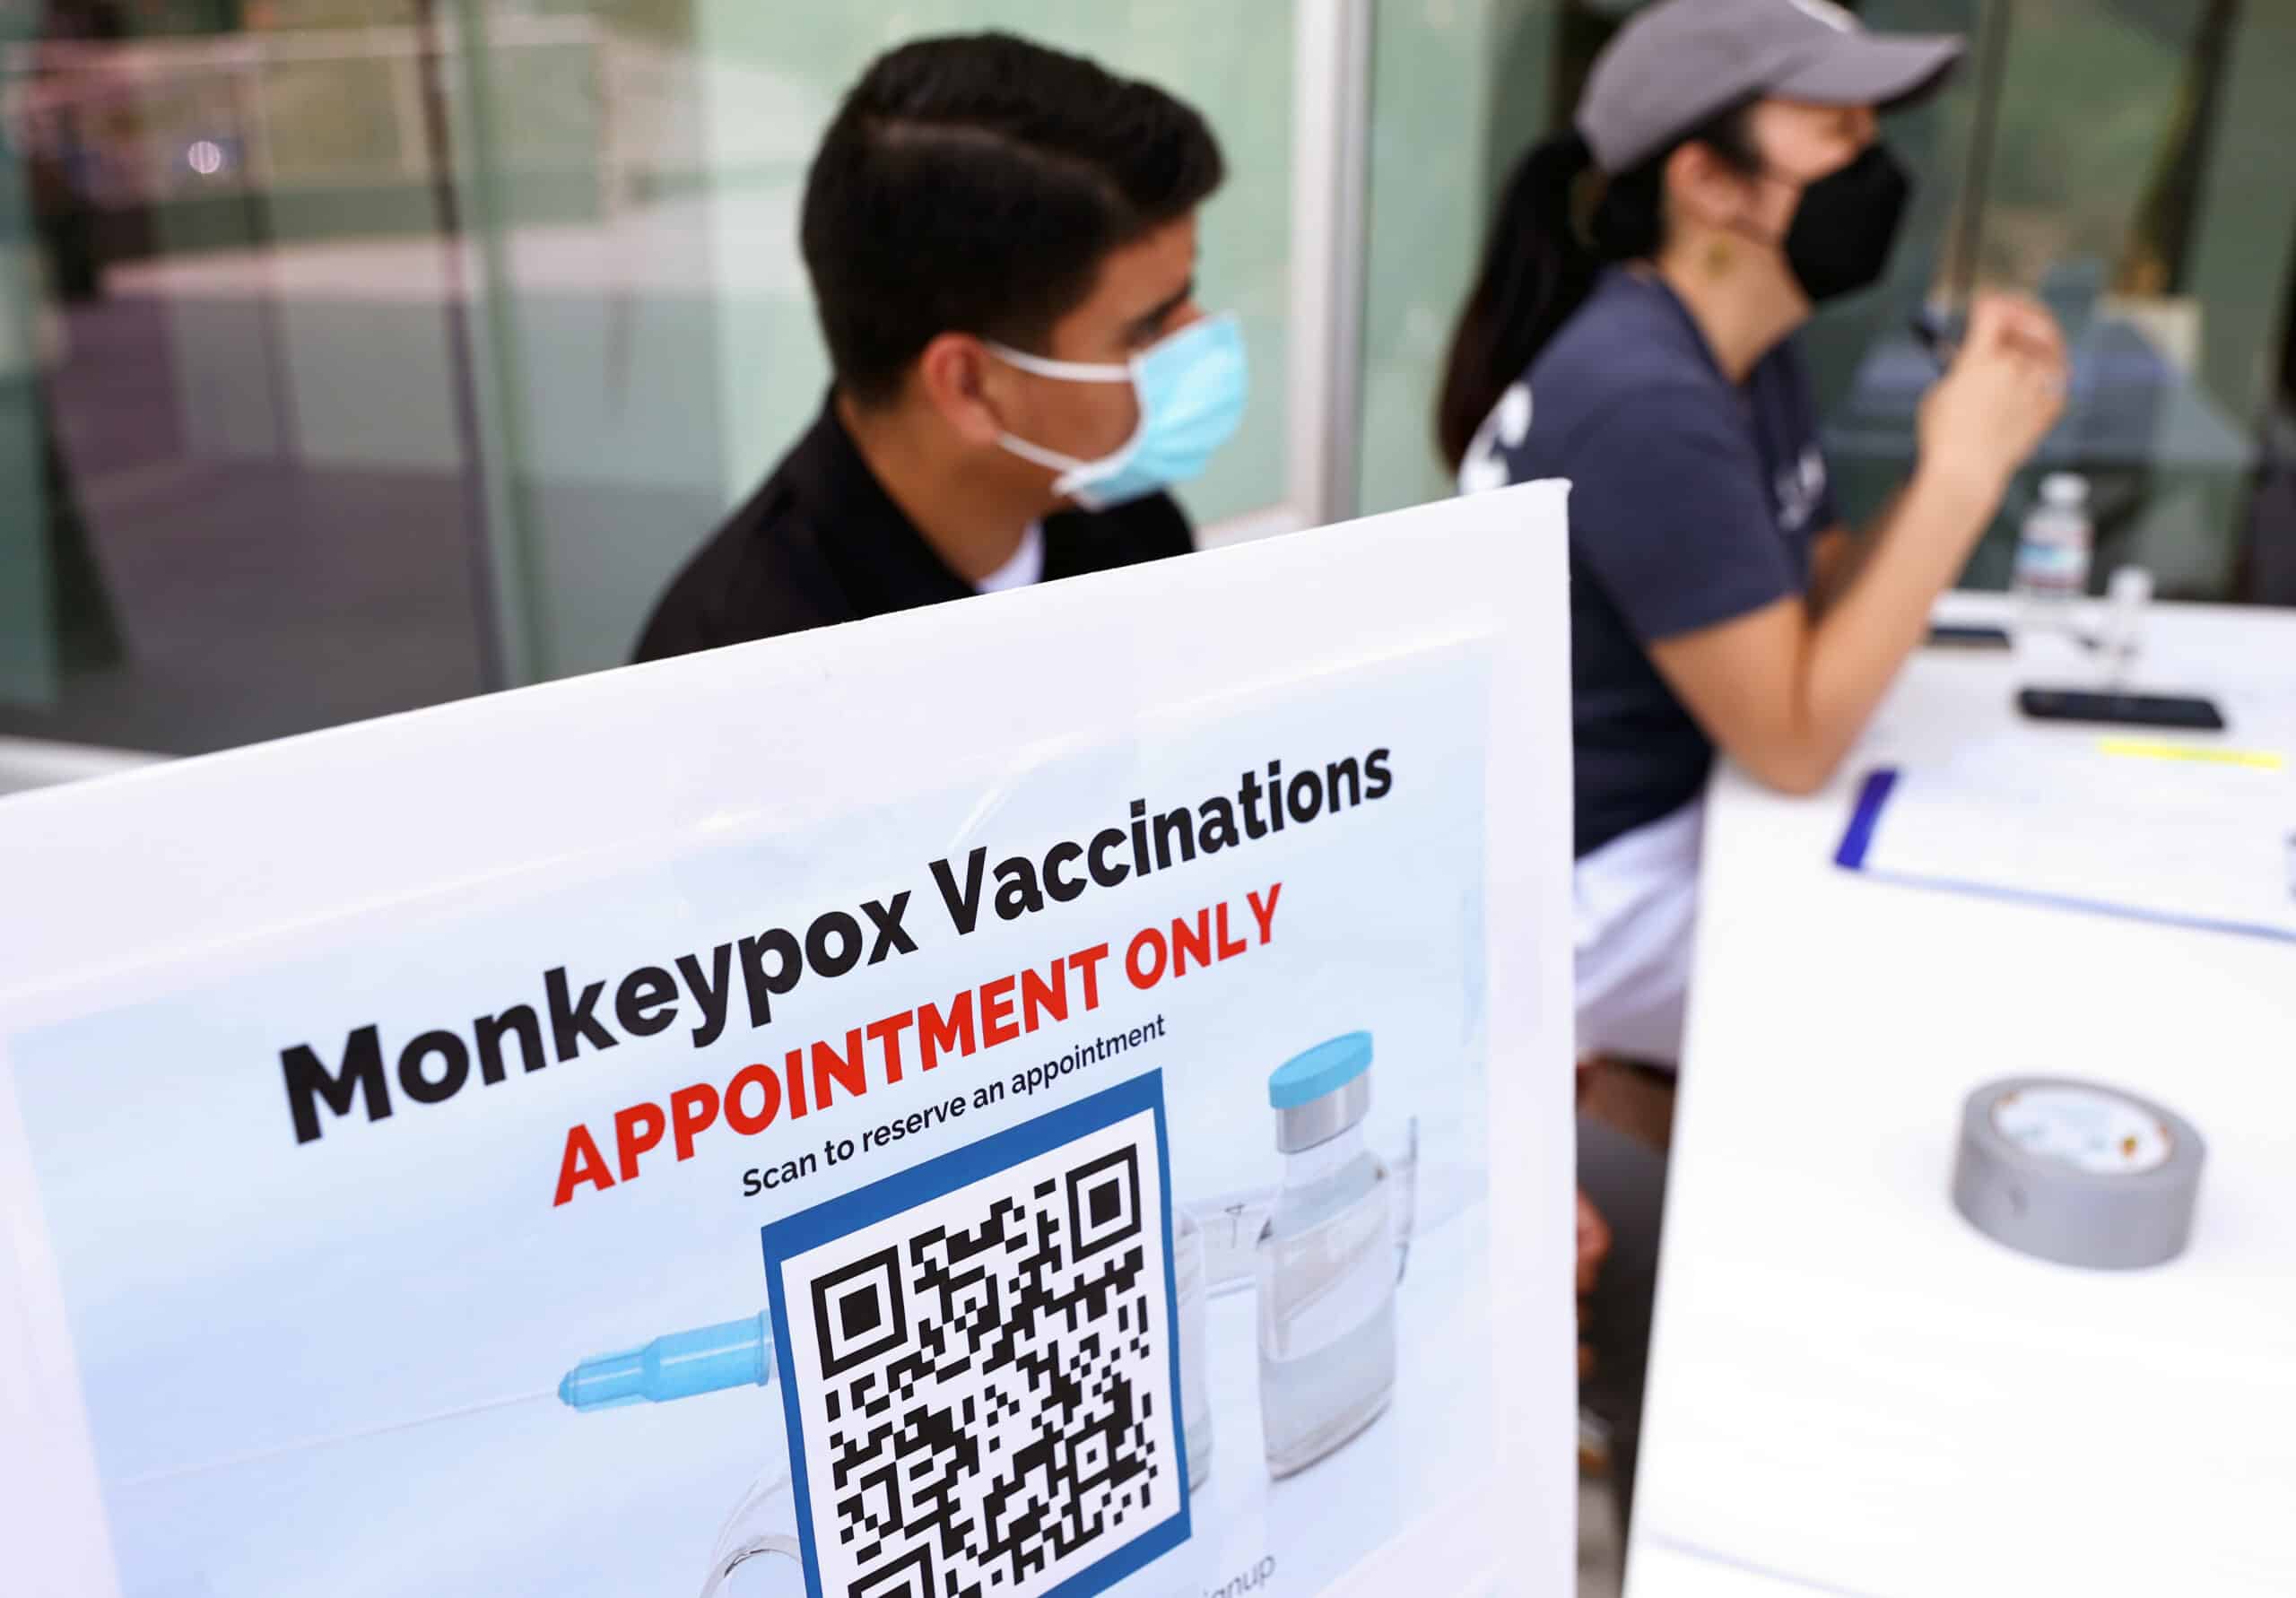 Monkeypox vaccination site